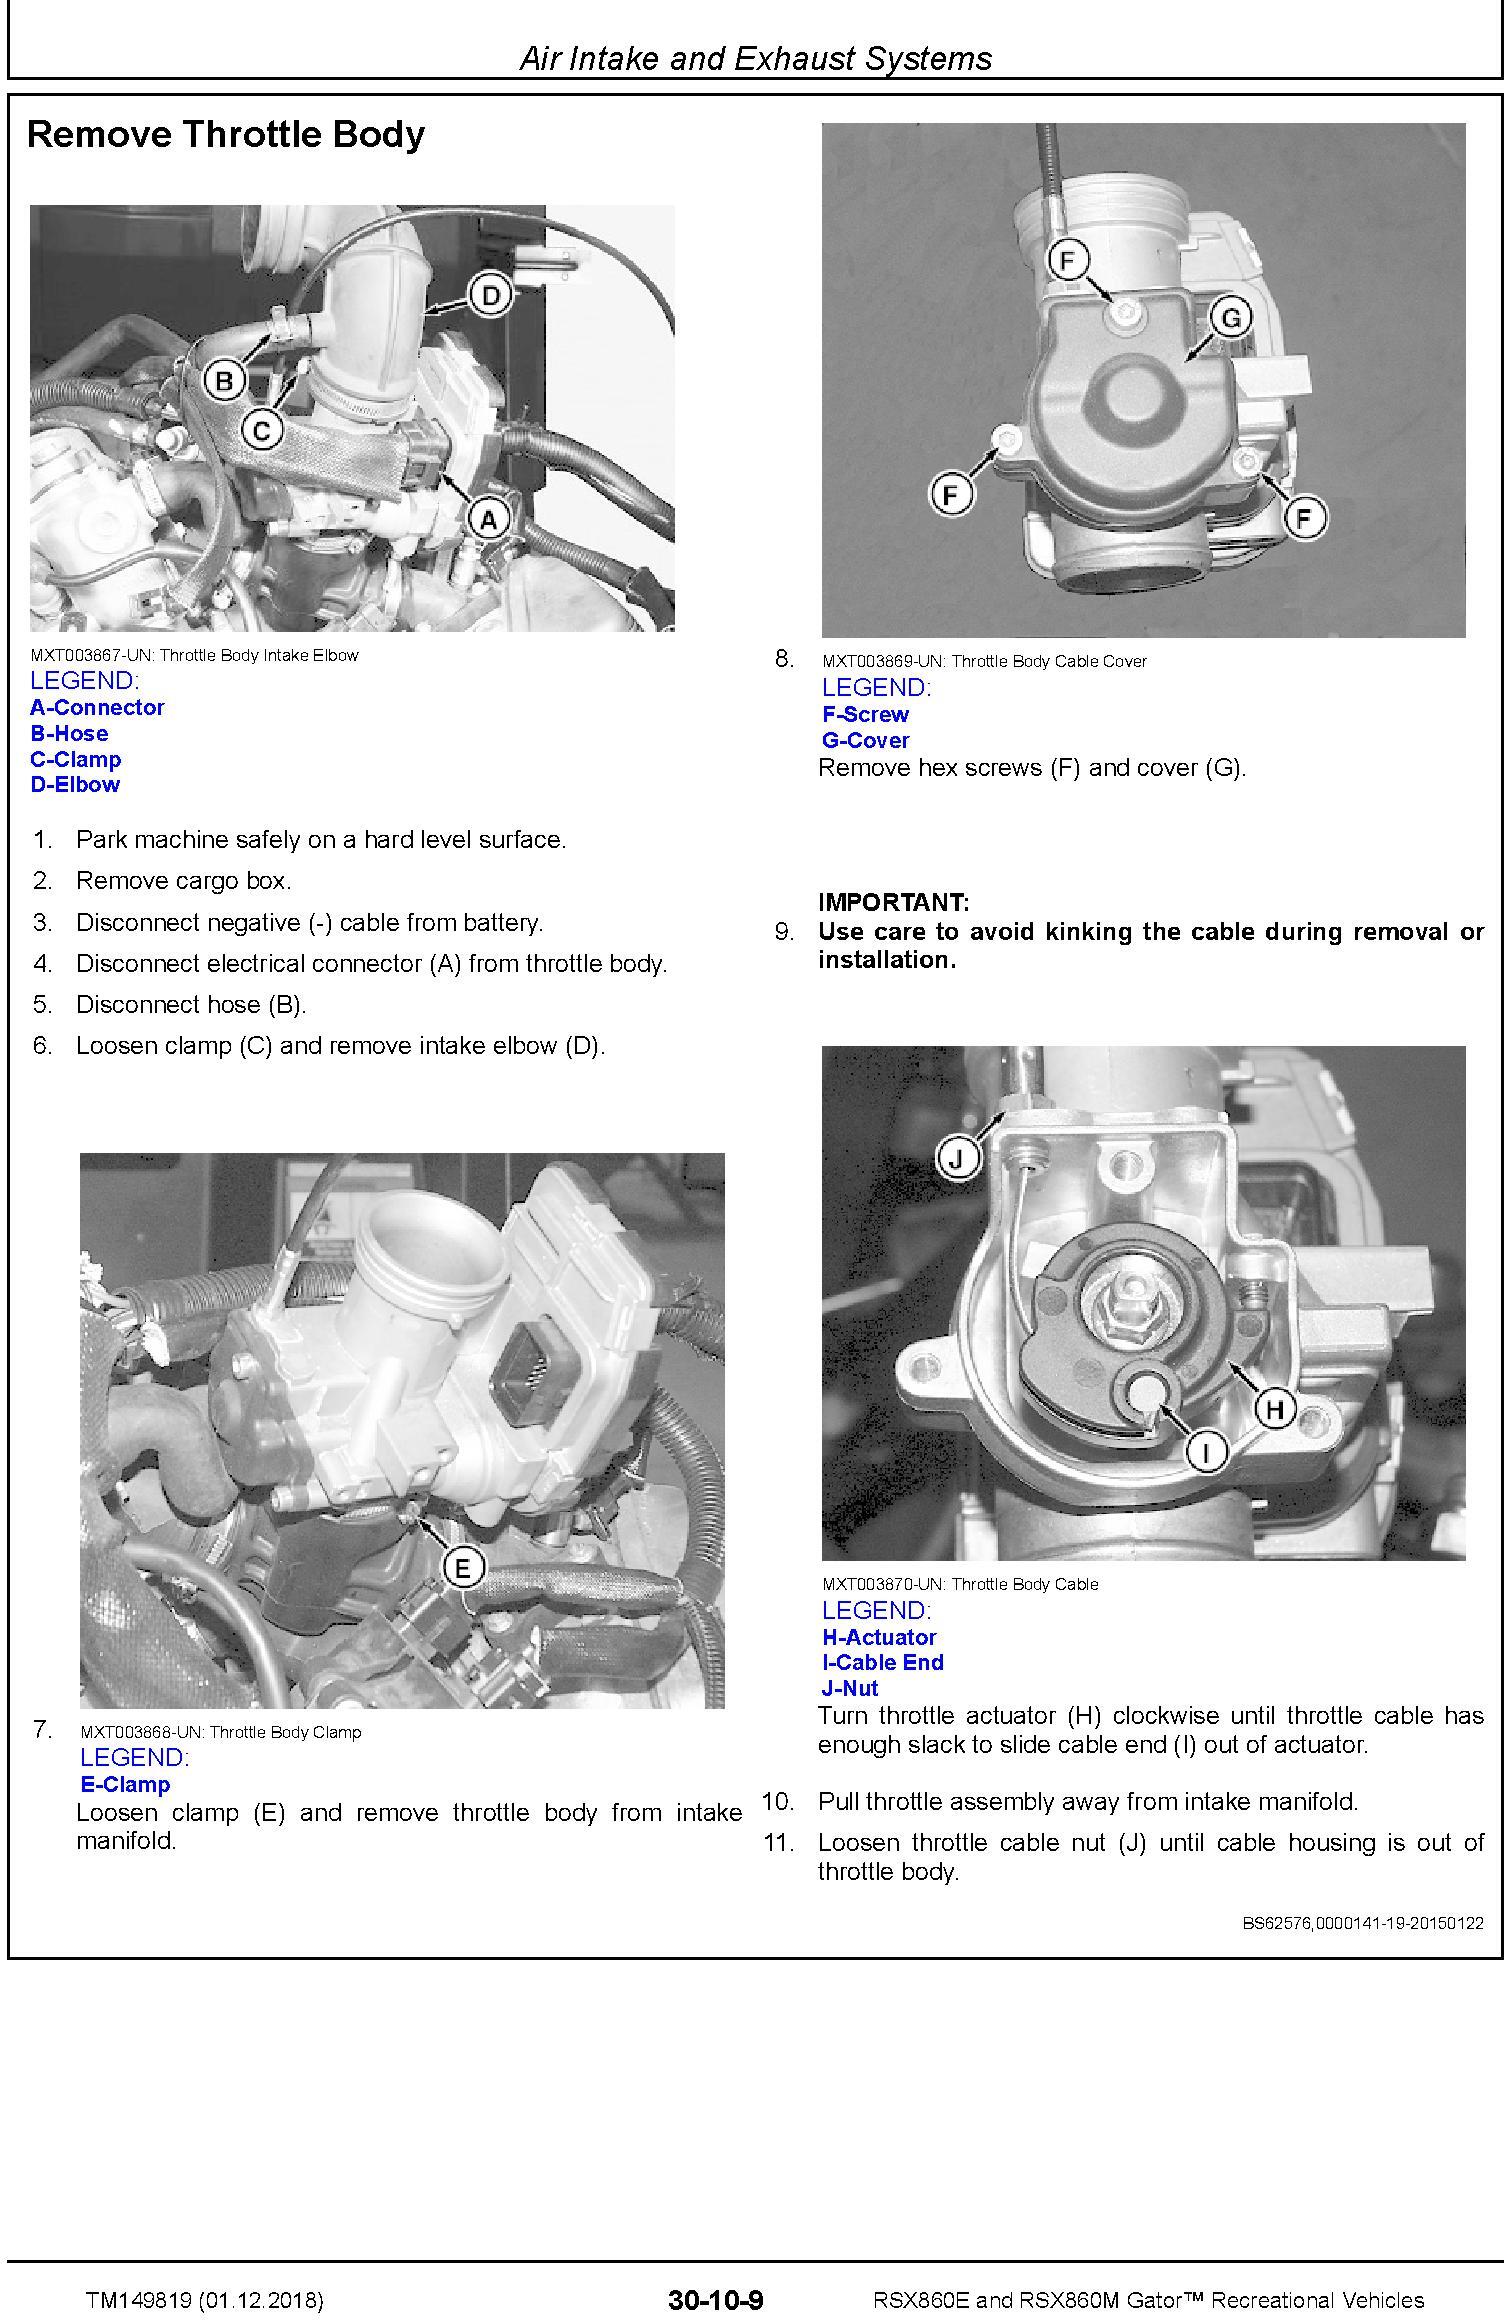 John Deere RSX860E and RSX860M Gator Recreational Vehicles (SN.010001-) Technical Manual (TM149819) - 3